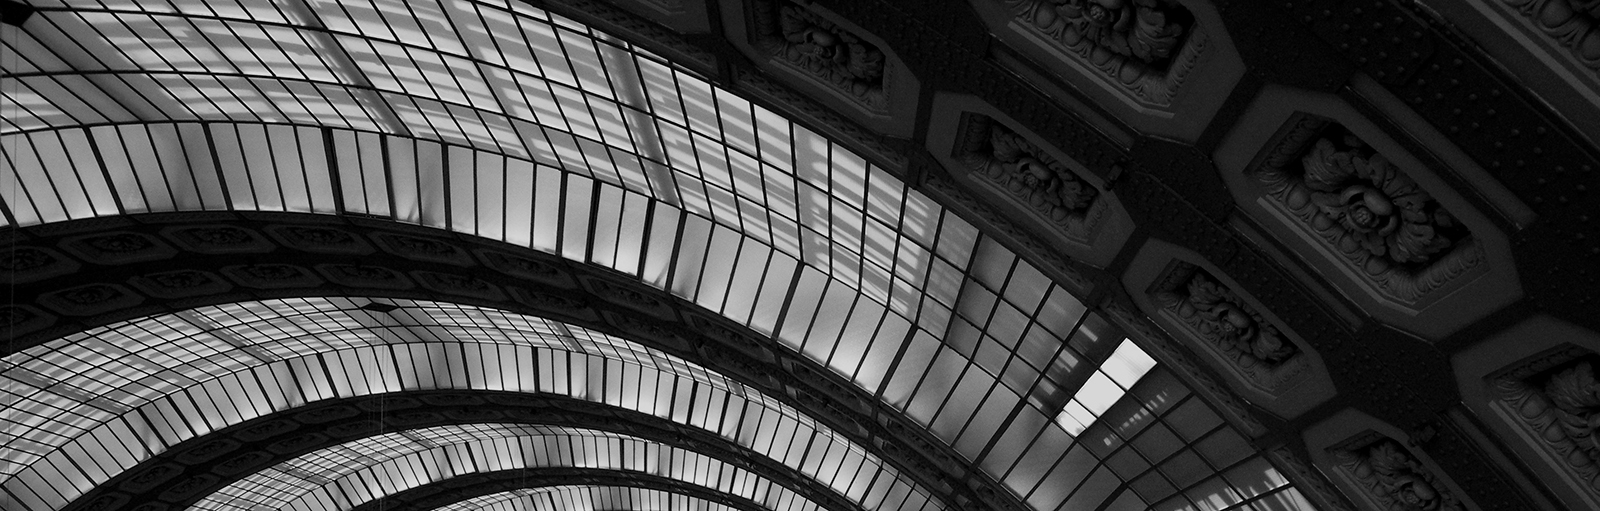 ceiling of the Orsay Museum in Paris